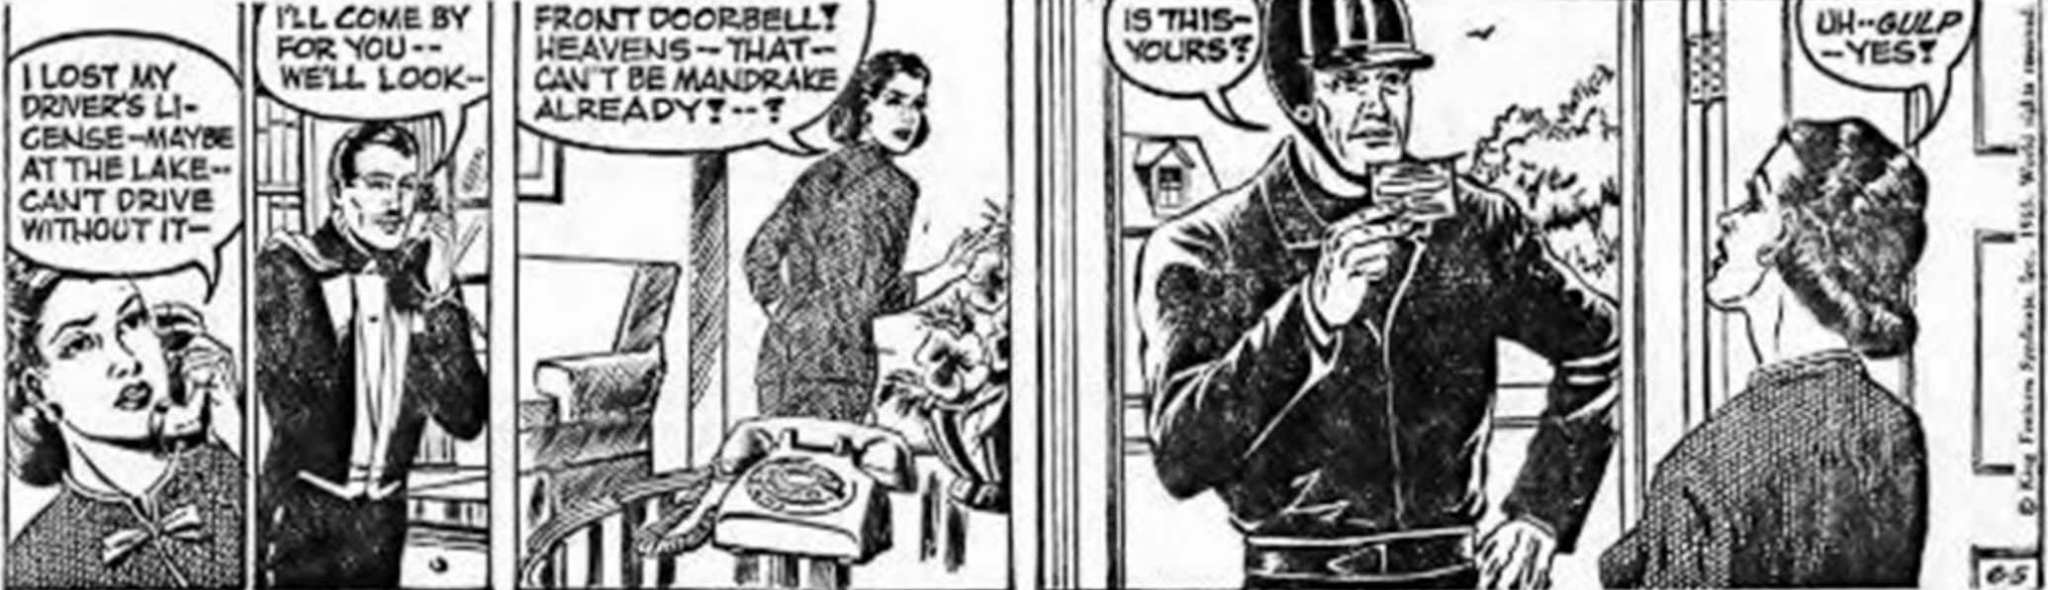 Davis fru tecknade Mandrake: Dagsstrippen den 5 juni 1965, ur The Odd Fellow, var Marthas sista dagsstripp